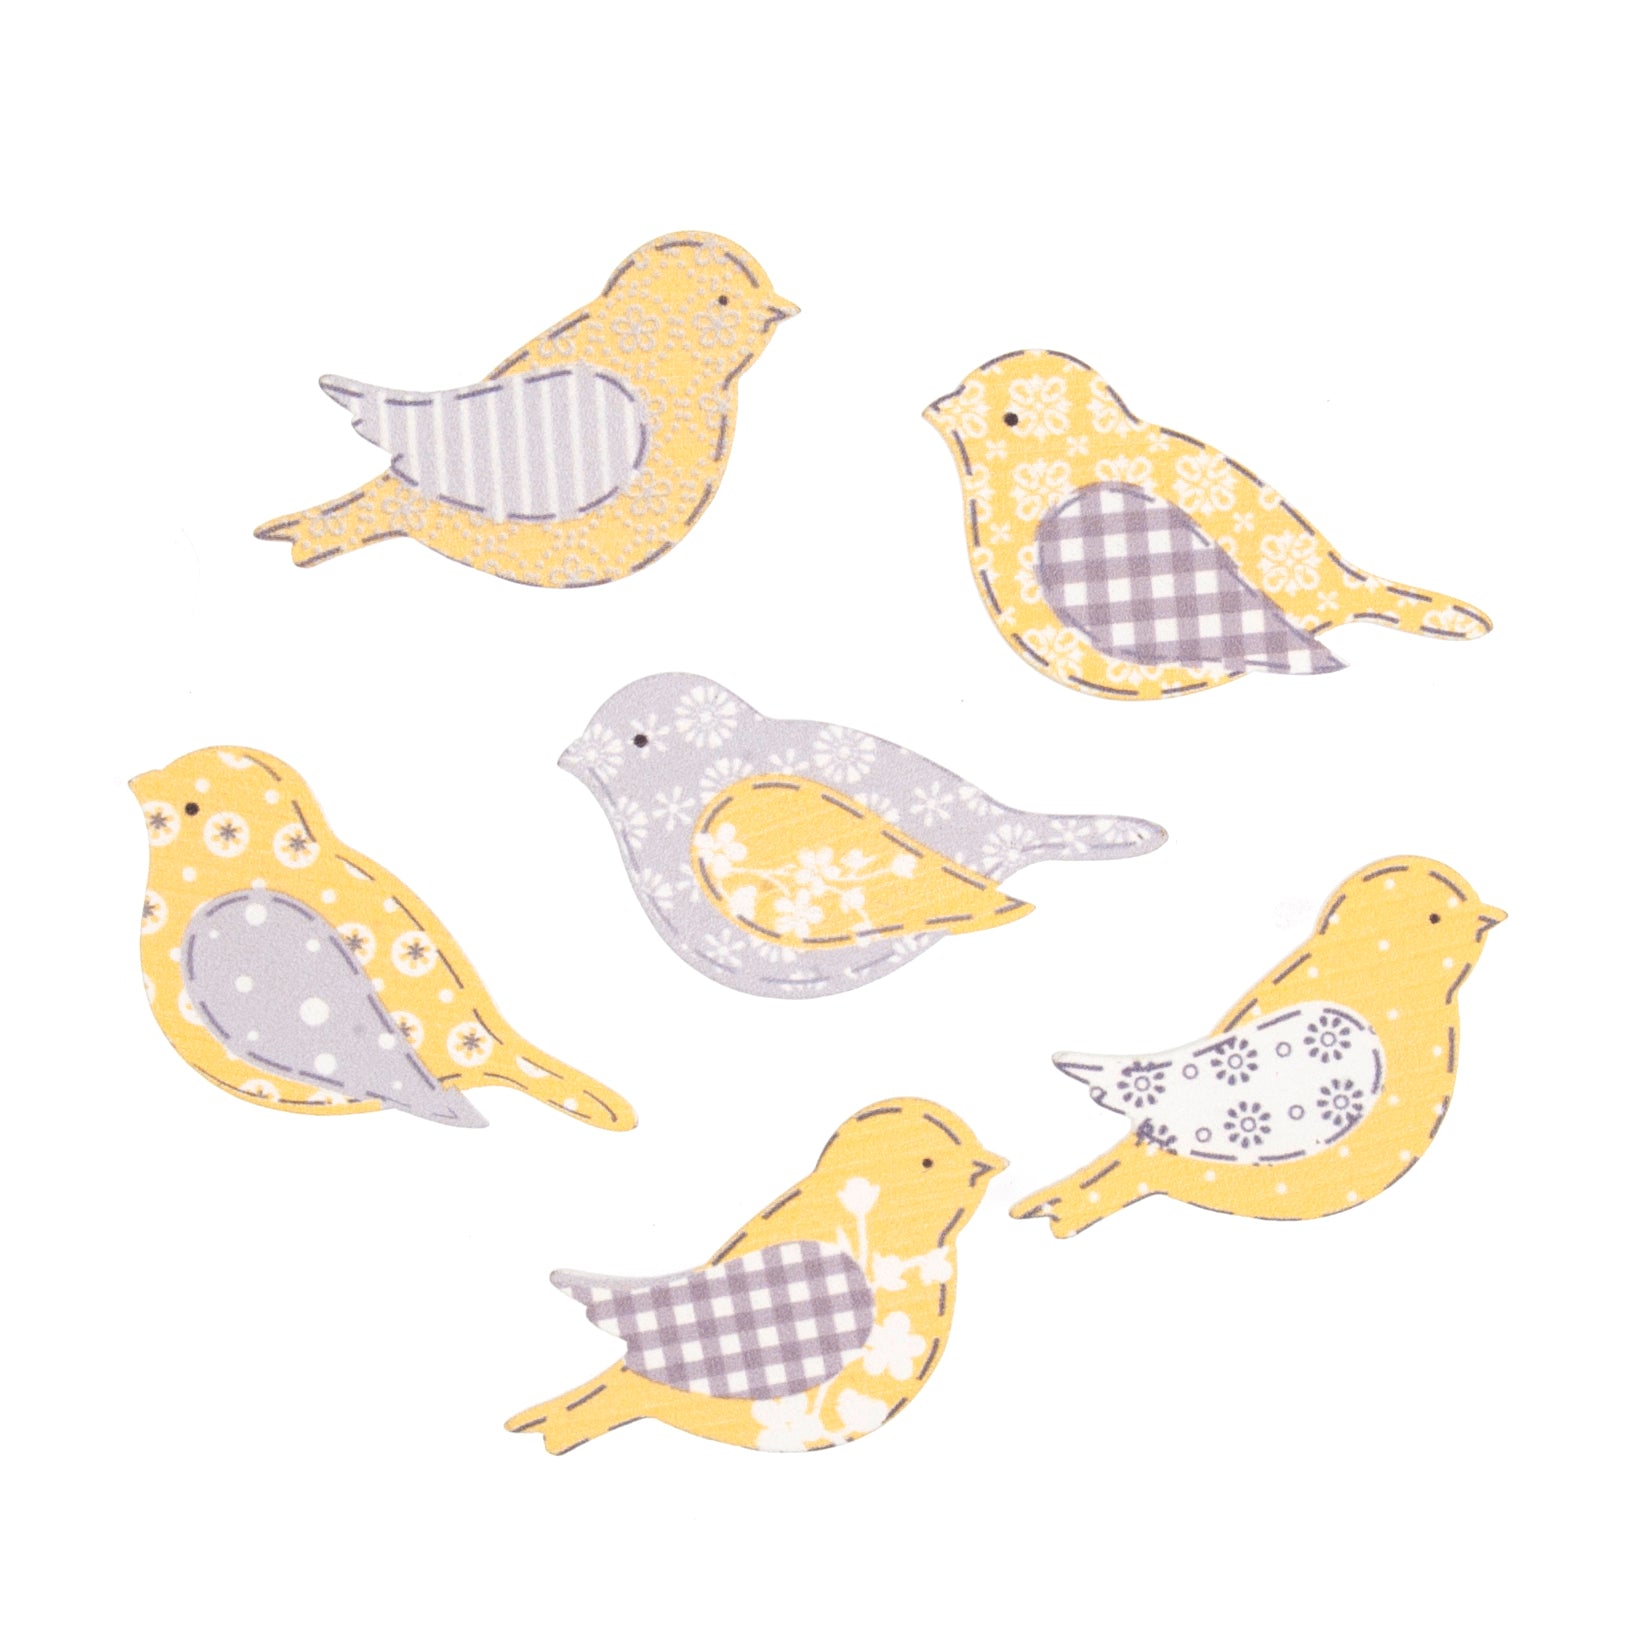 Craft Embellishments: Assorted Birds - 6pc